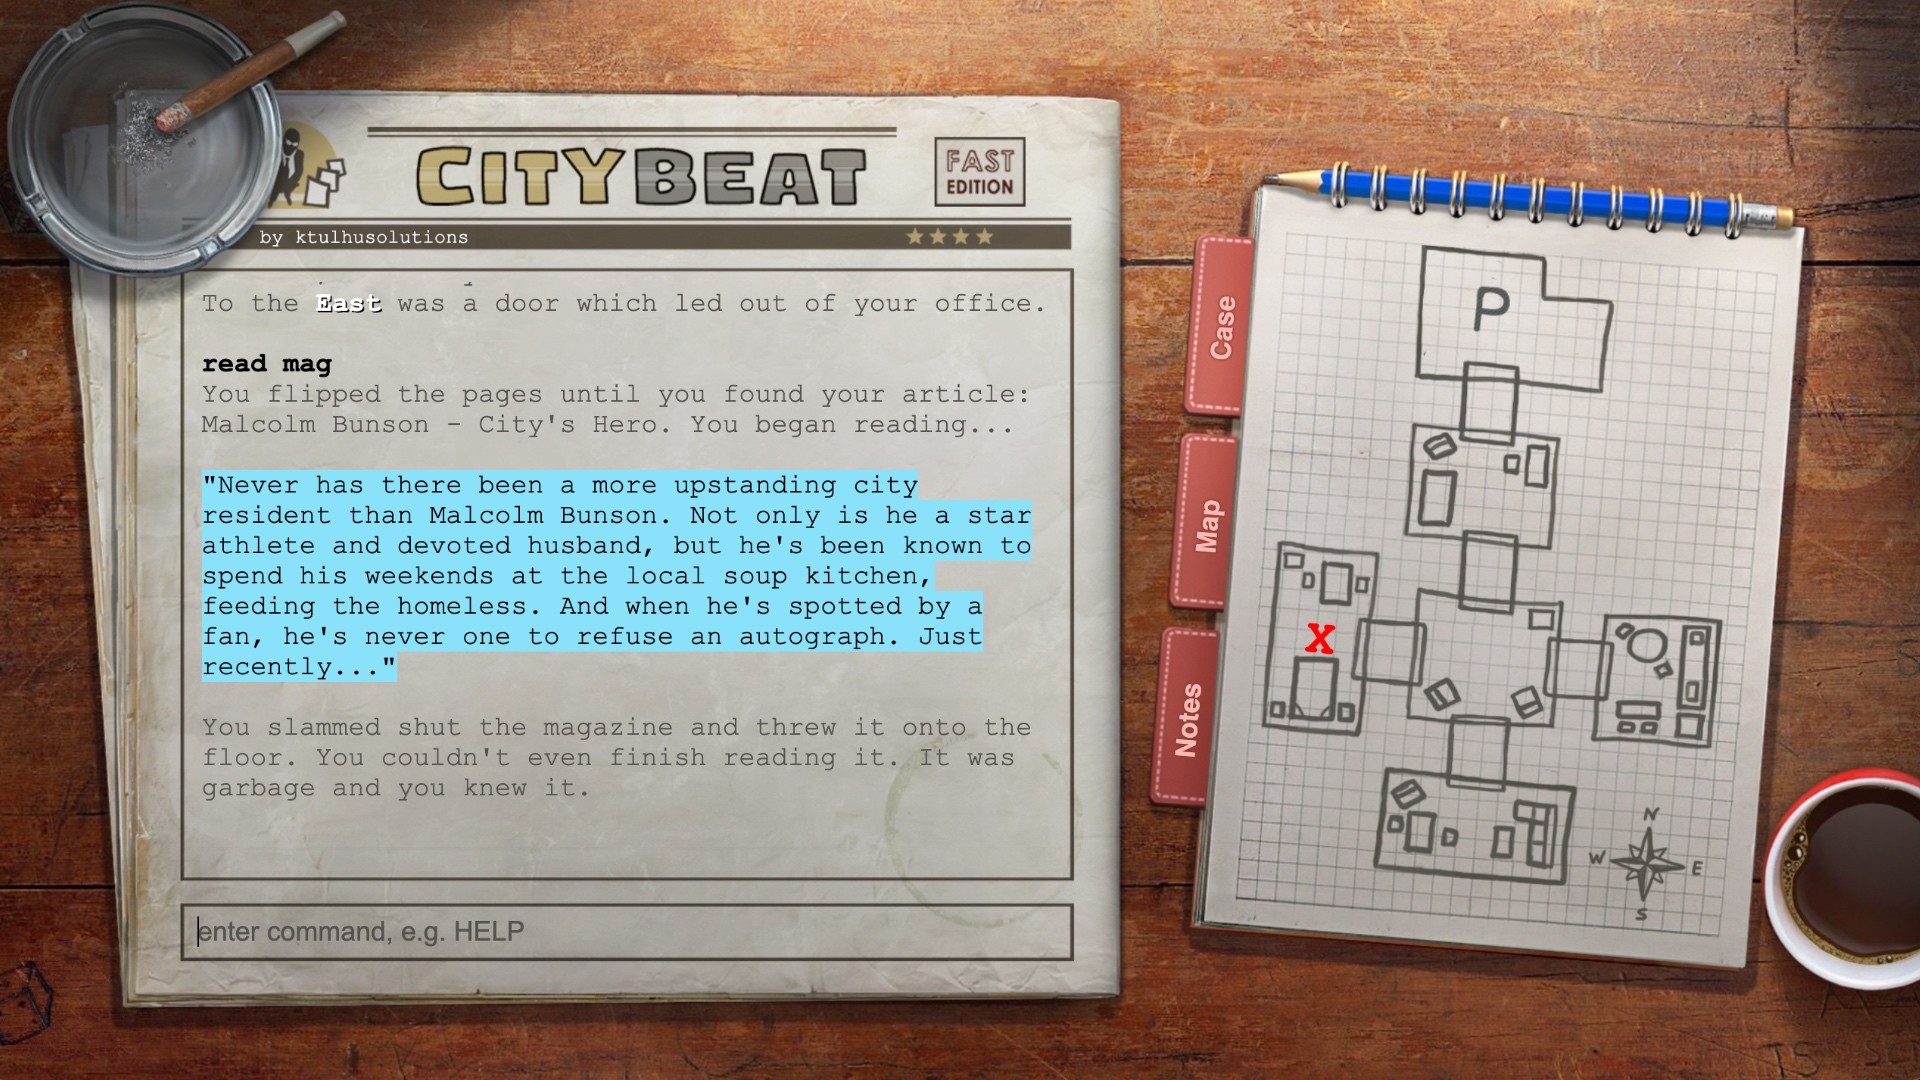 CityBeat: The Sorority Shuffle screenshot